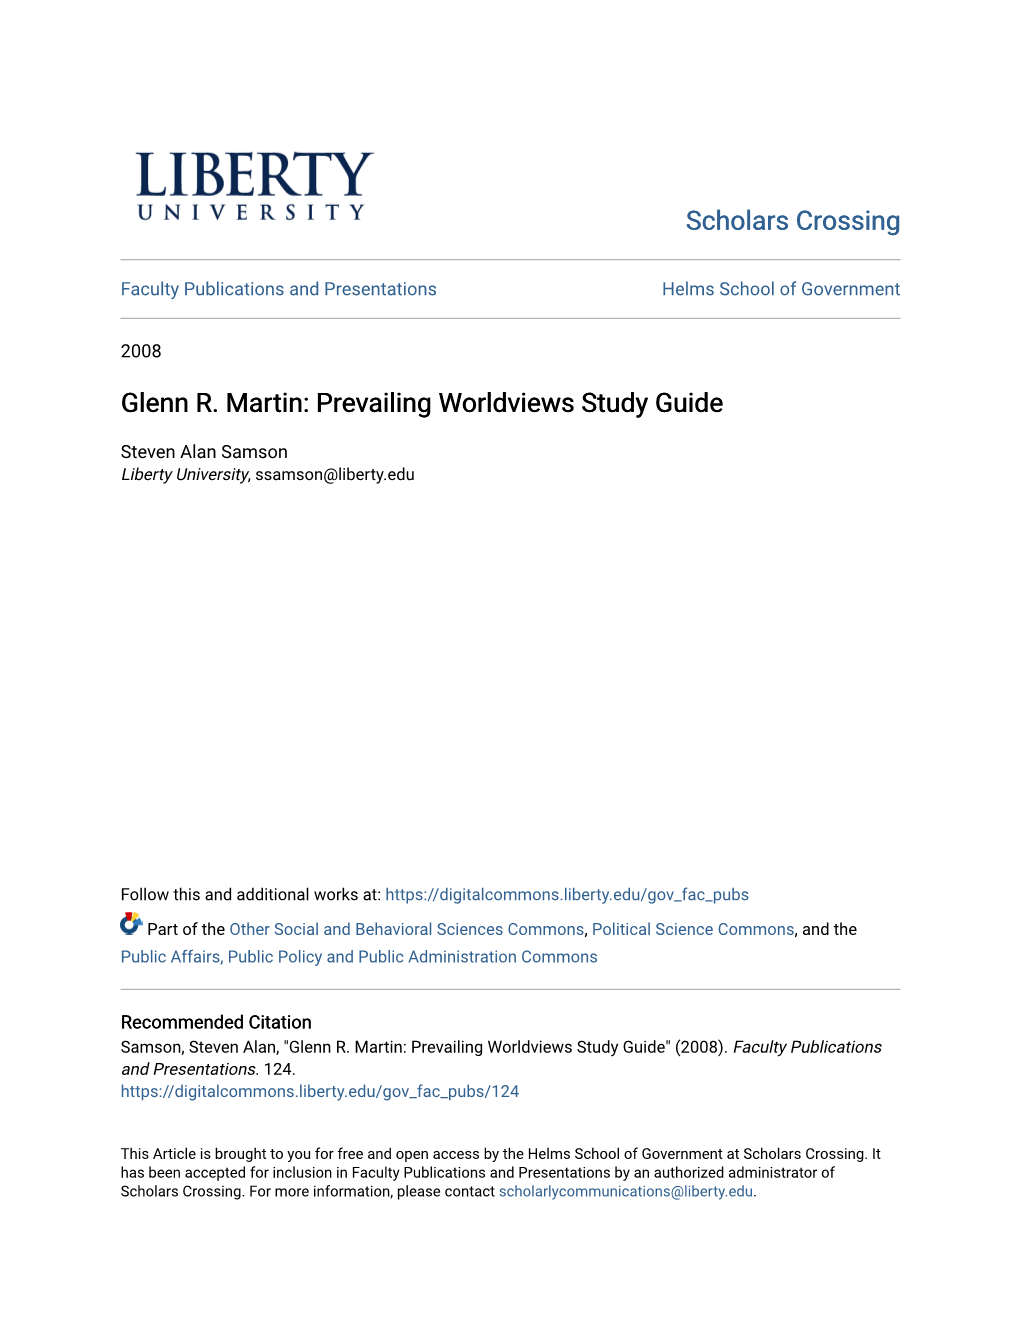 Glenn R. Martin: Prevailing Worldviews Study Guide